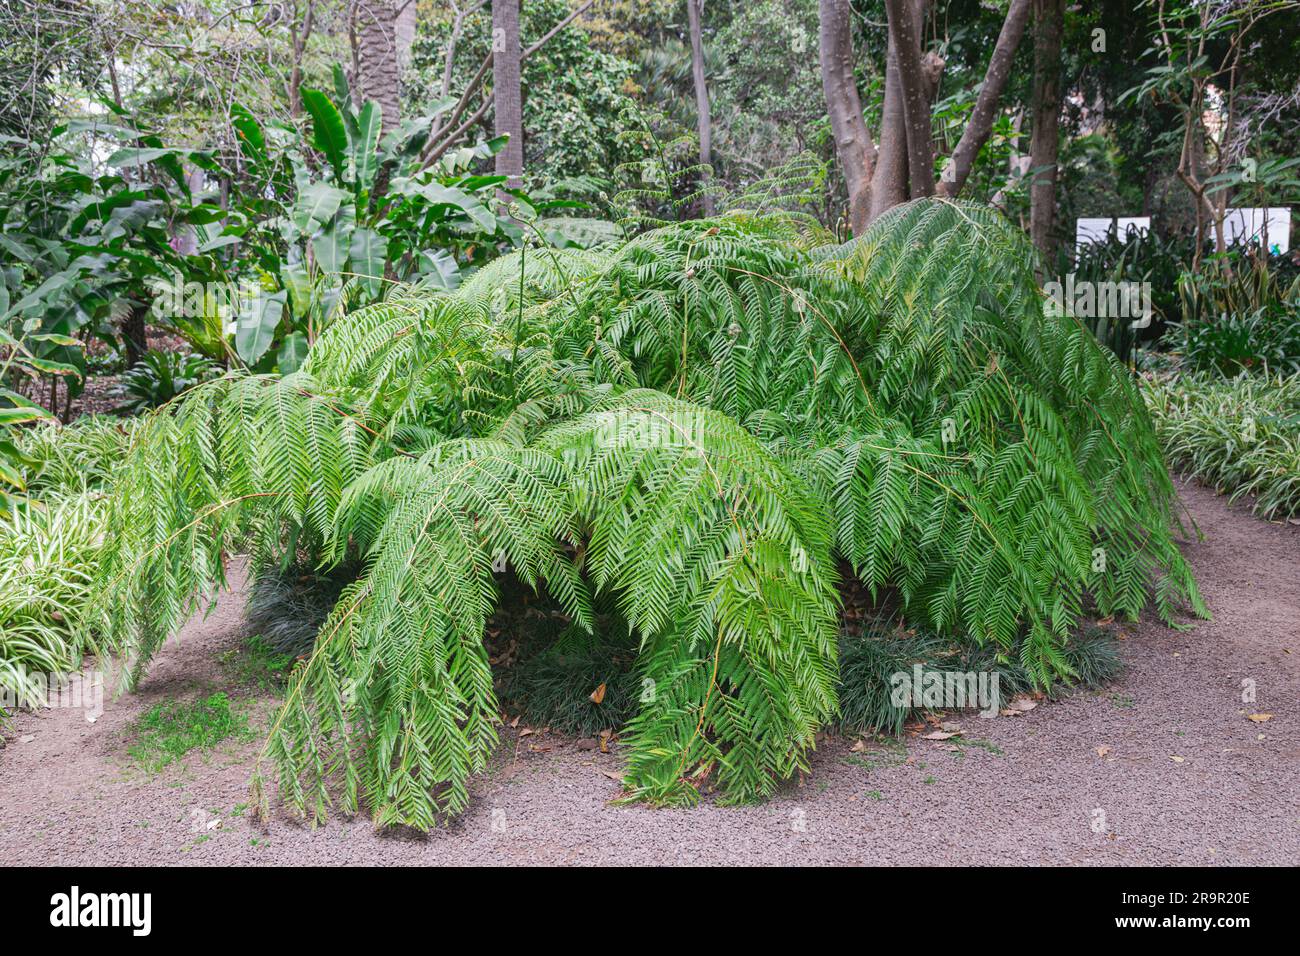 Mexican tree fern (Cibotium schiedei), with green vegetation background Stock Photo